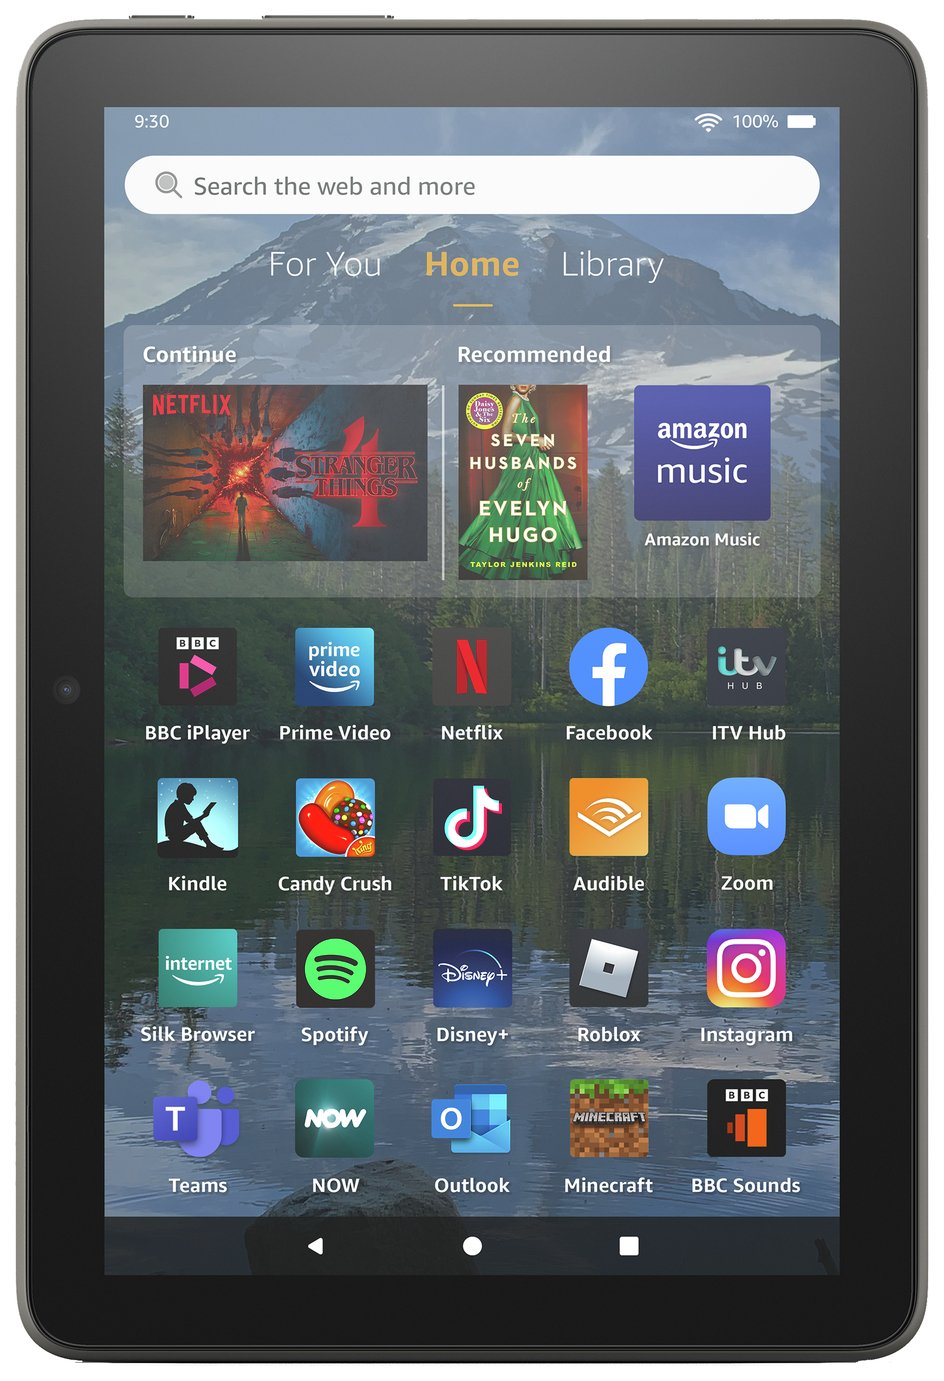 Amazon Fire HD 8 Plus 8 Inch 32GB Wi-Fi Tablet - Grey